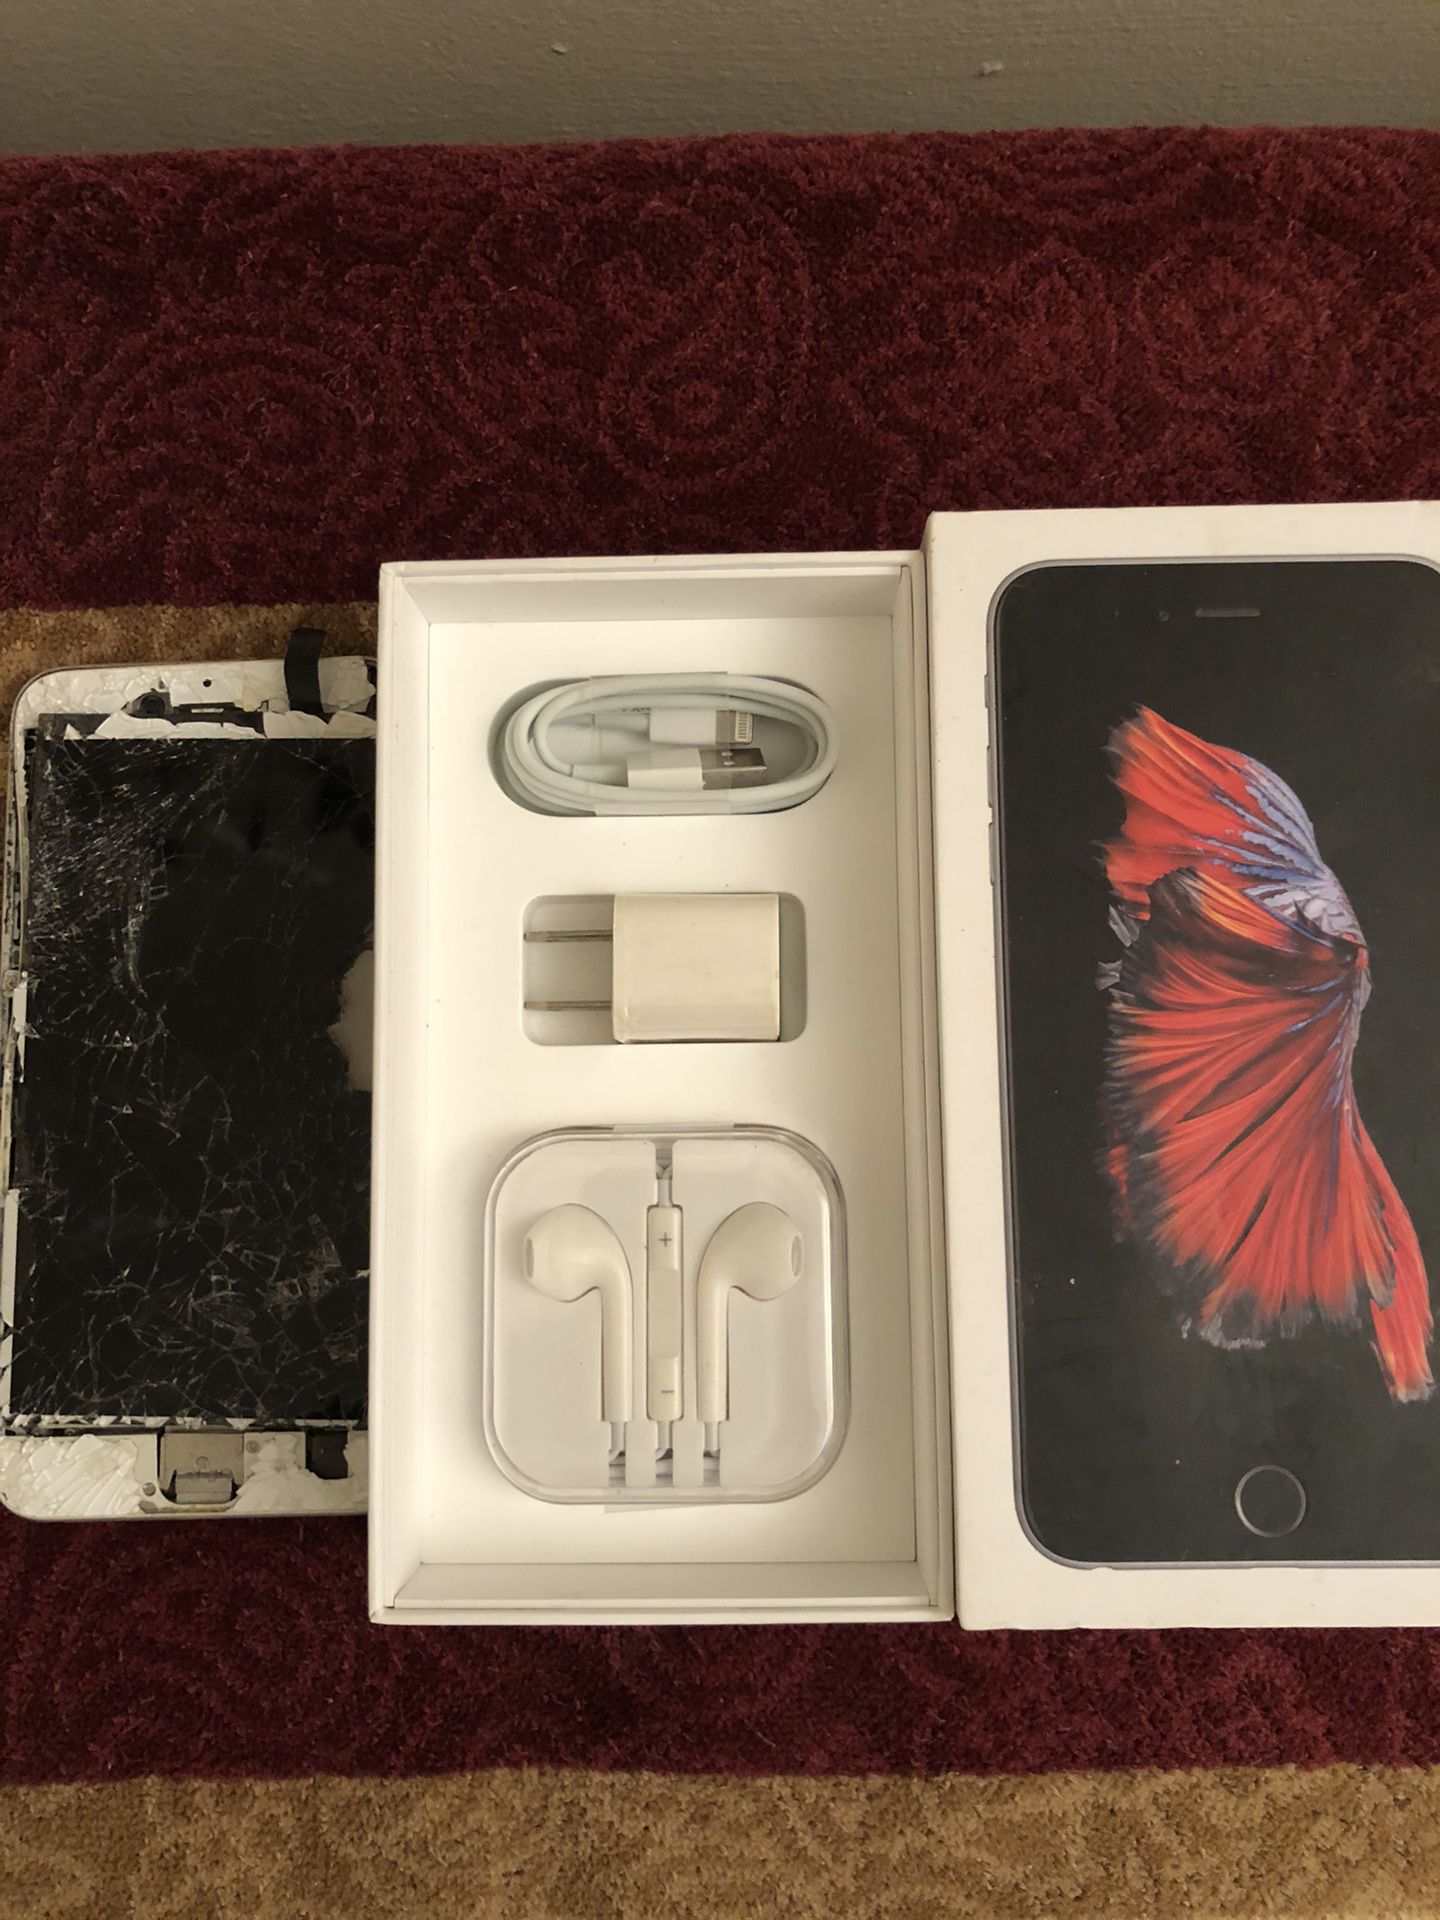 Damaged Apple iPhone 6 Plus A1687 32GB Silver Unlocked